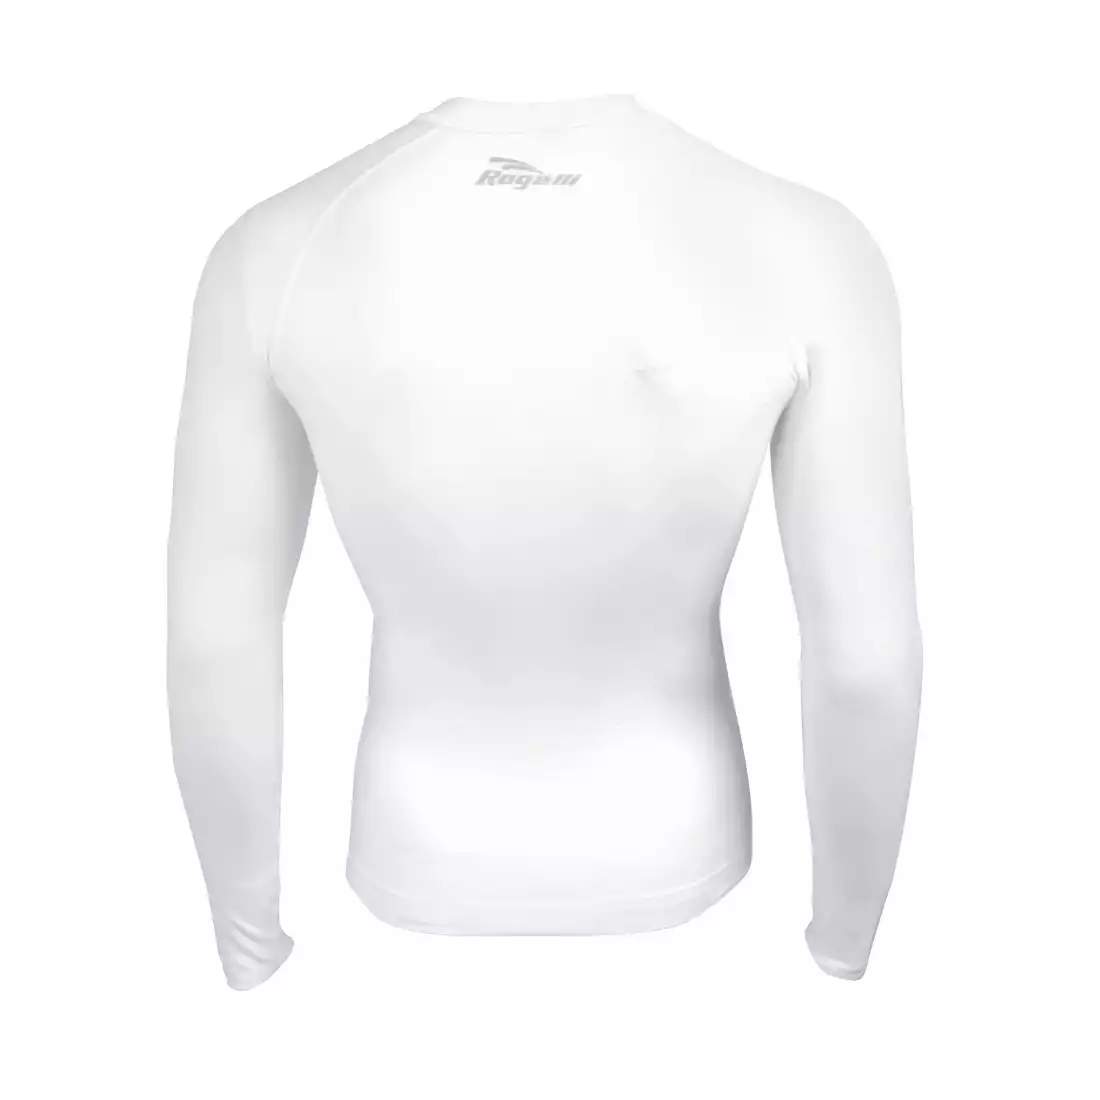 ROGELLI SKINLIFE - bielizna termoaktywna - koszulka D/R